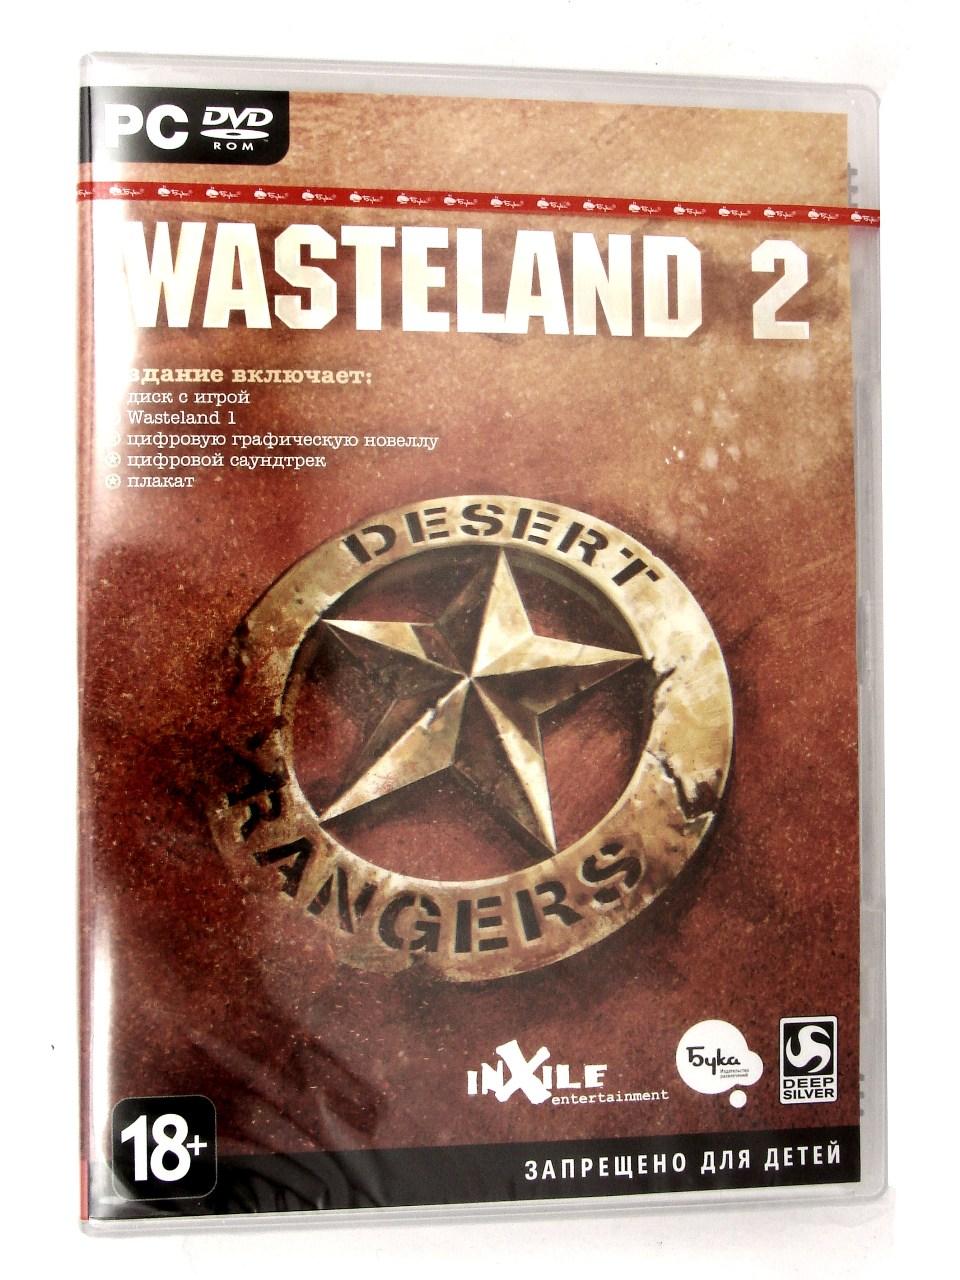 Компьютерный компакт-диск Wasteland 2 (PC), "Бука", DVD